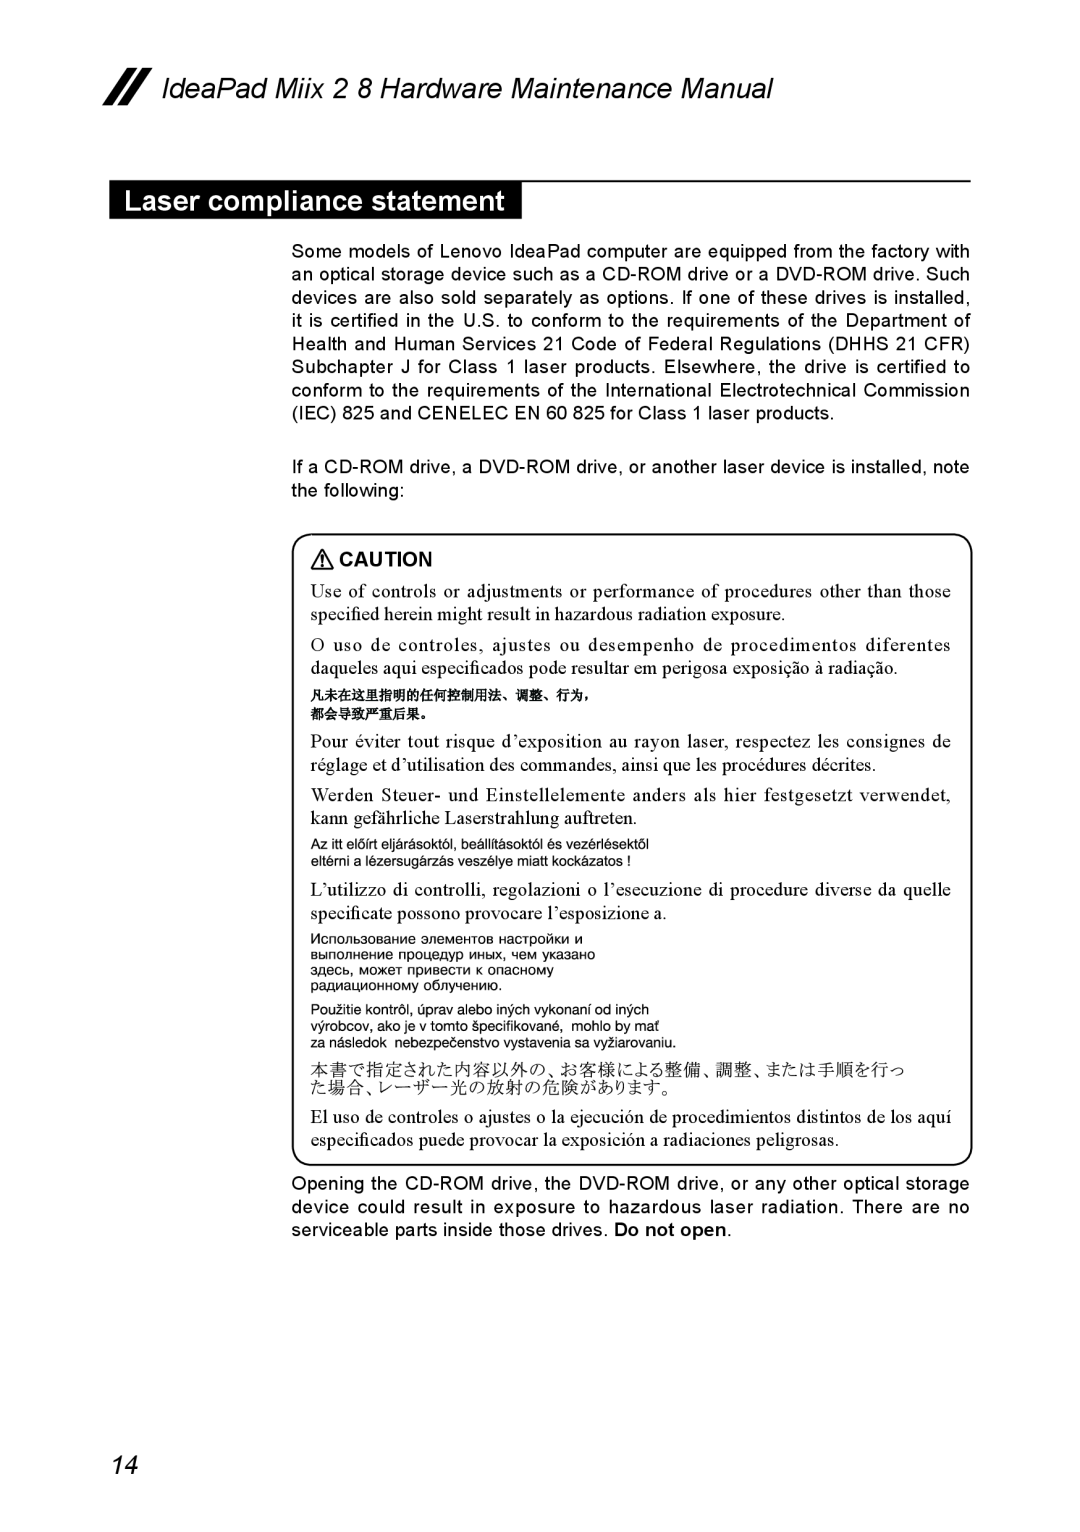 Lenovo MIIX 2 8 manual Laser compliance statement, IdeaPad Miix 2 8 Hardware Maintenance Manual 